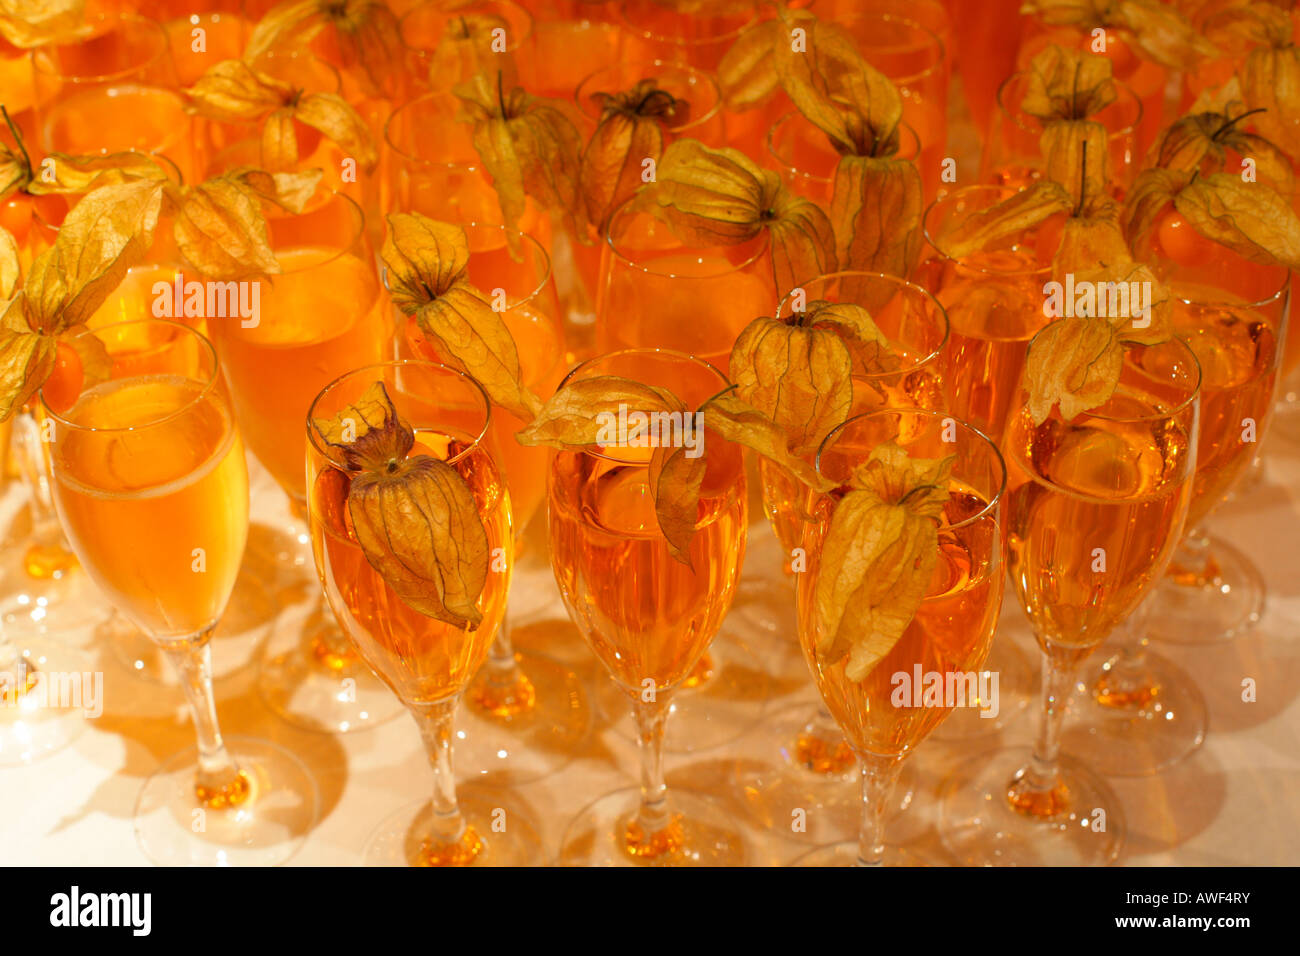 Champagne glasses garnished with Chinese lantern fruit Stock Photo